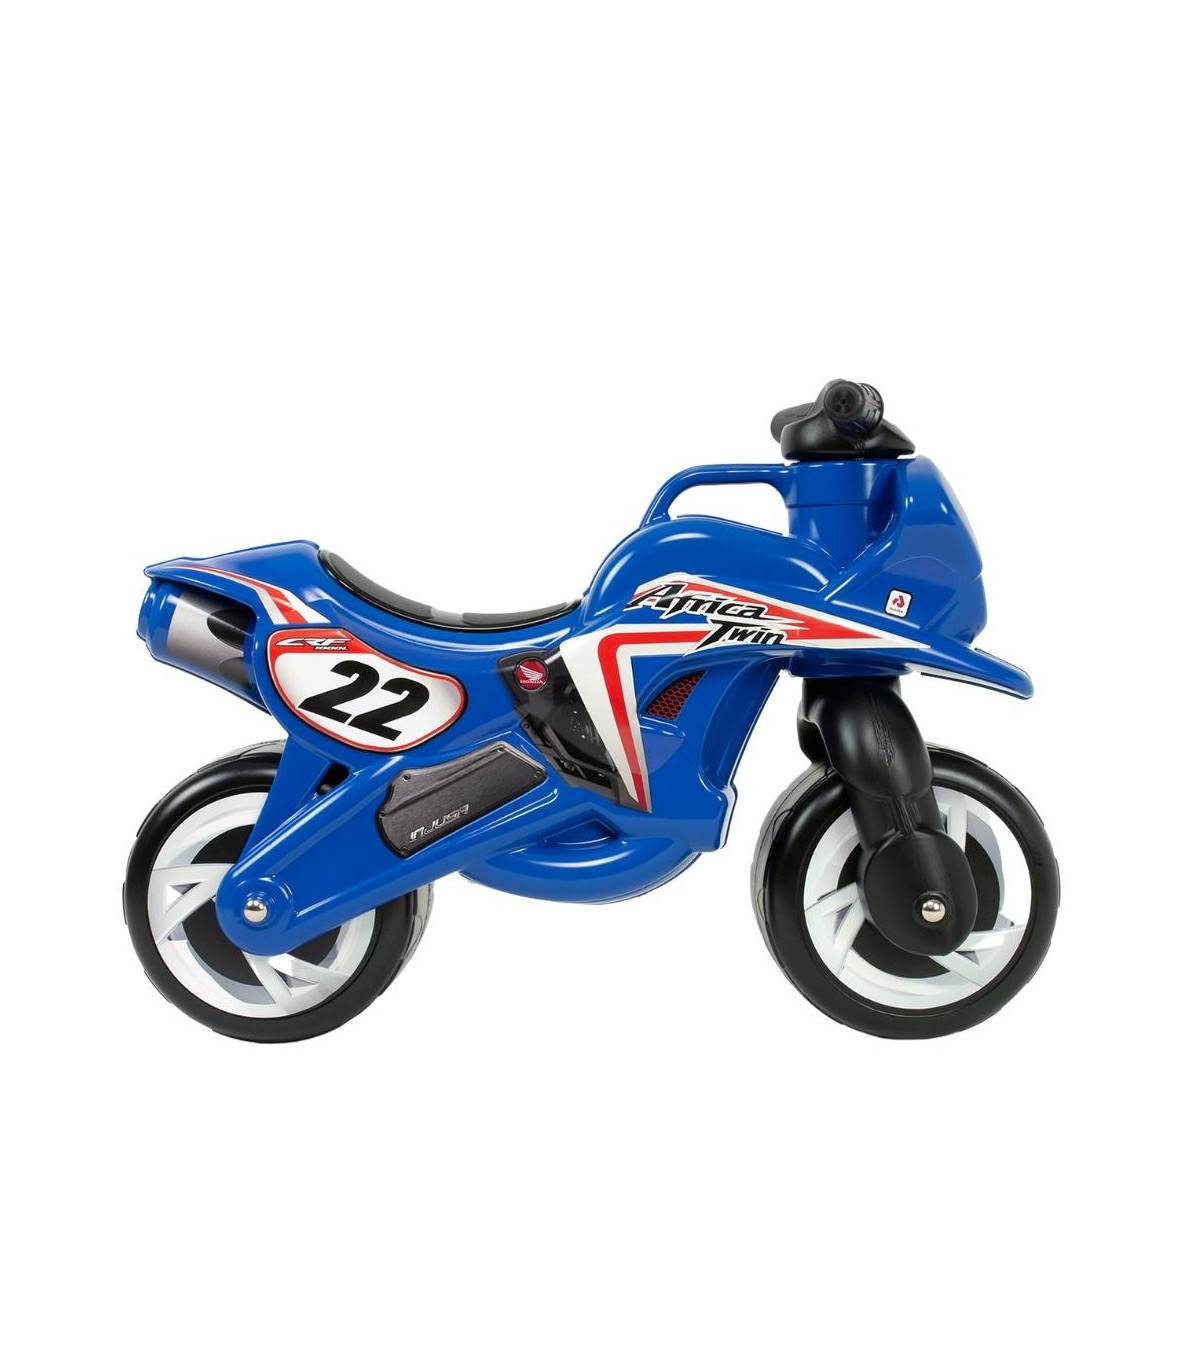 Porteur moto roues libres - Bleu/Vert